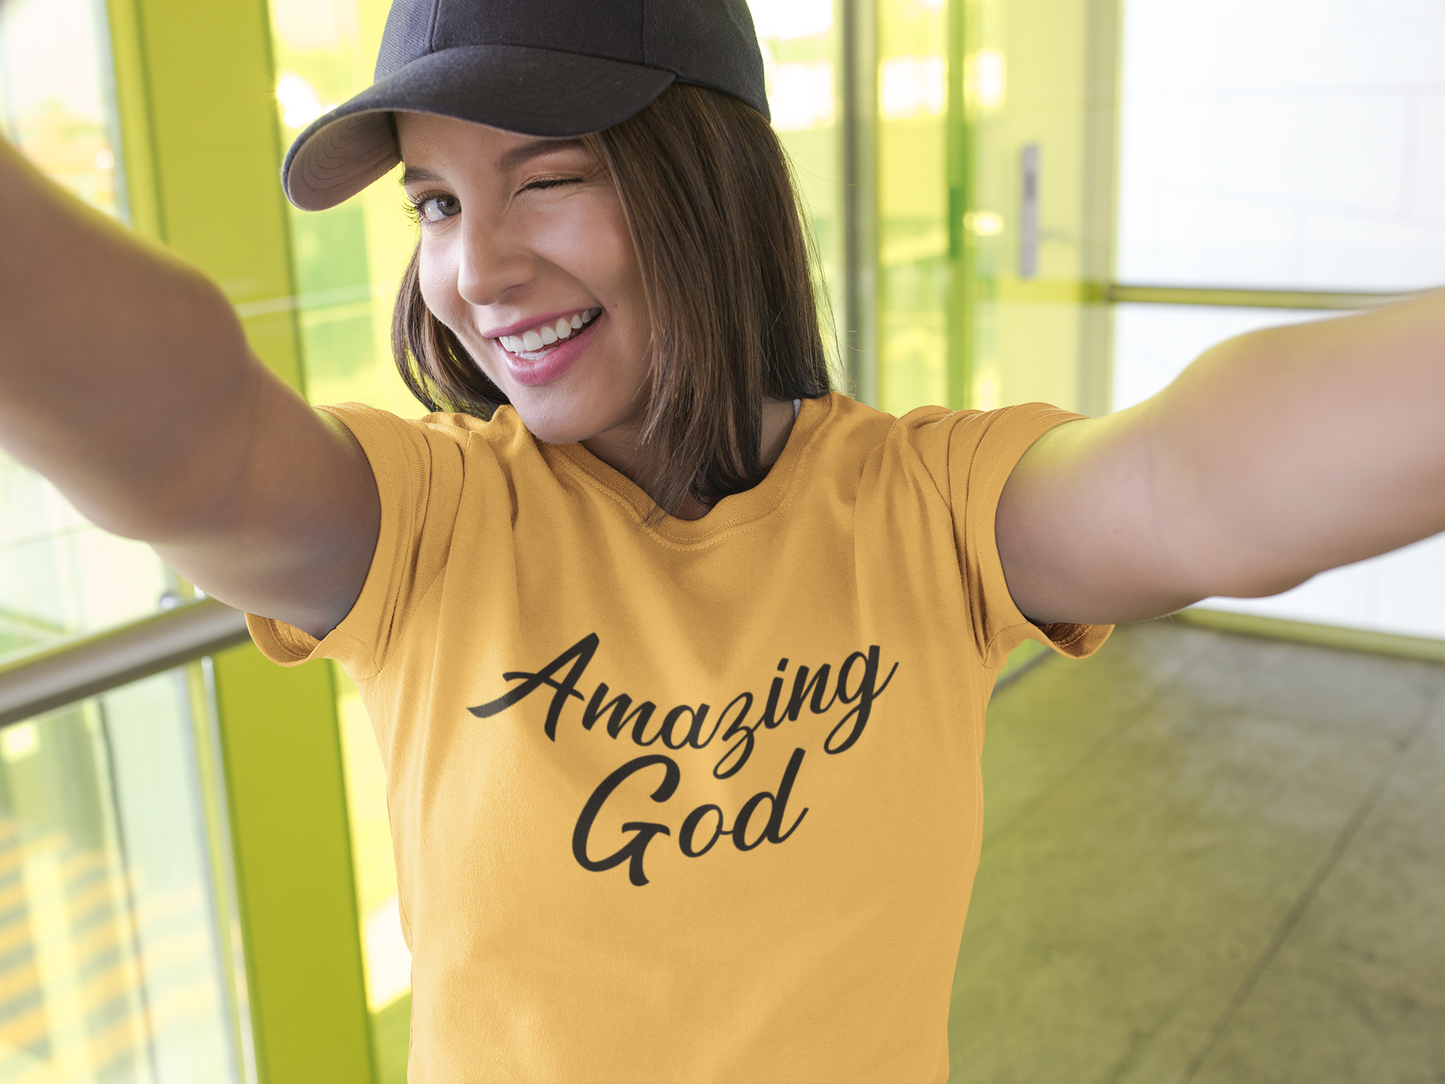 Amazing God, Unisexshirt, Motivational Shirt, Inspirational Shirt, Positive Shirts, Gift Ideas for Women, Gift Ideas for Men